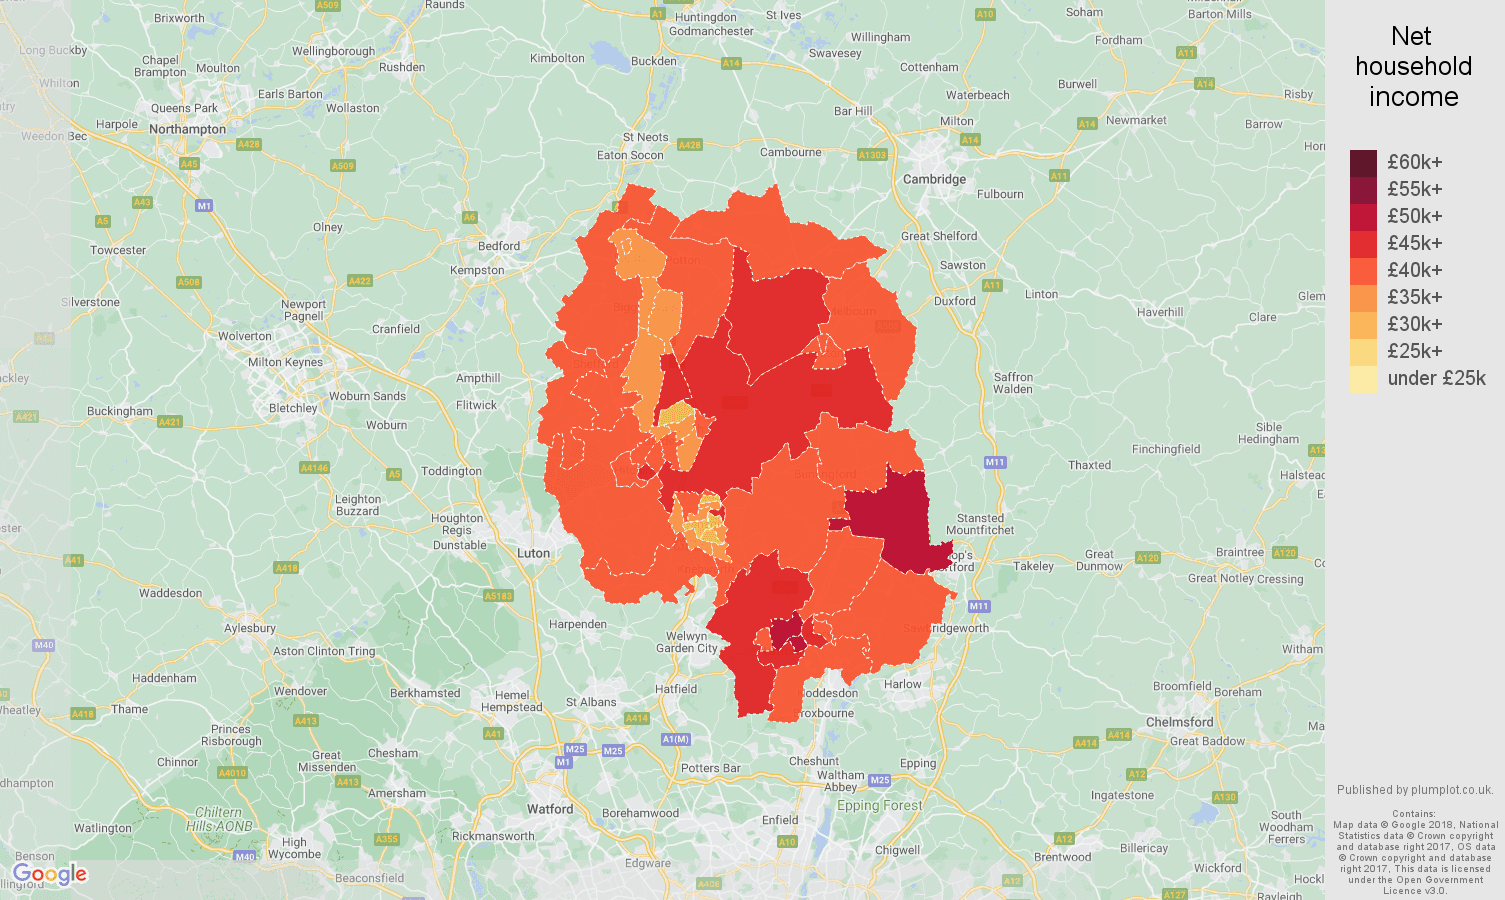 Stevenage net household income map